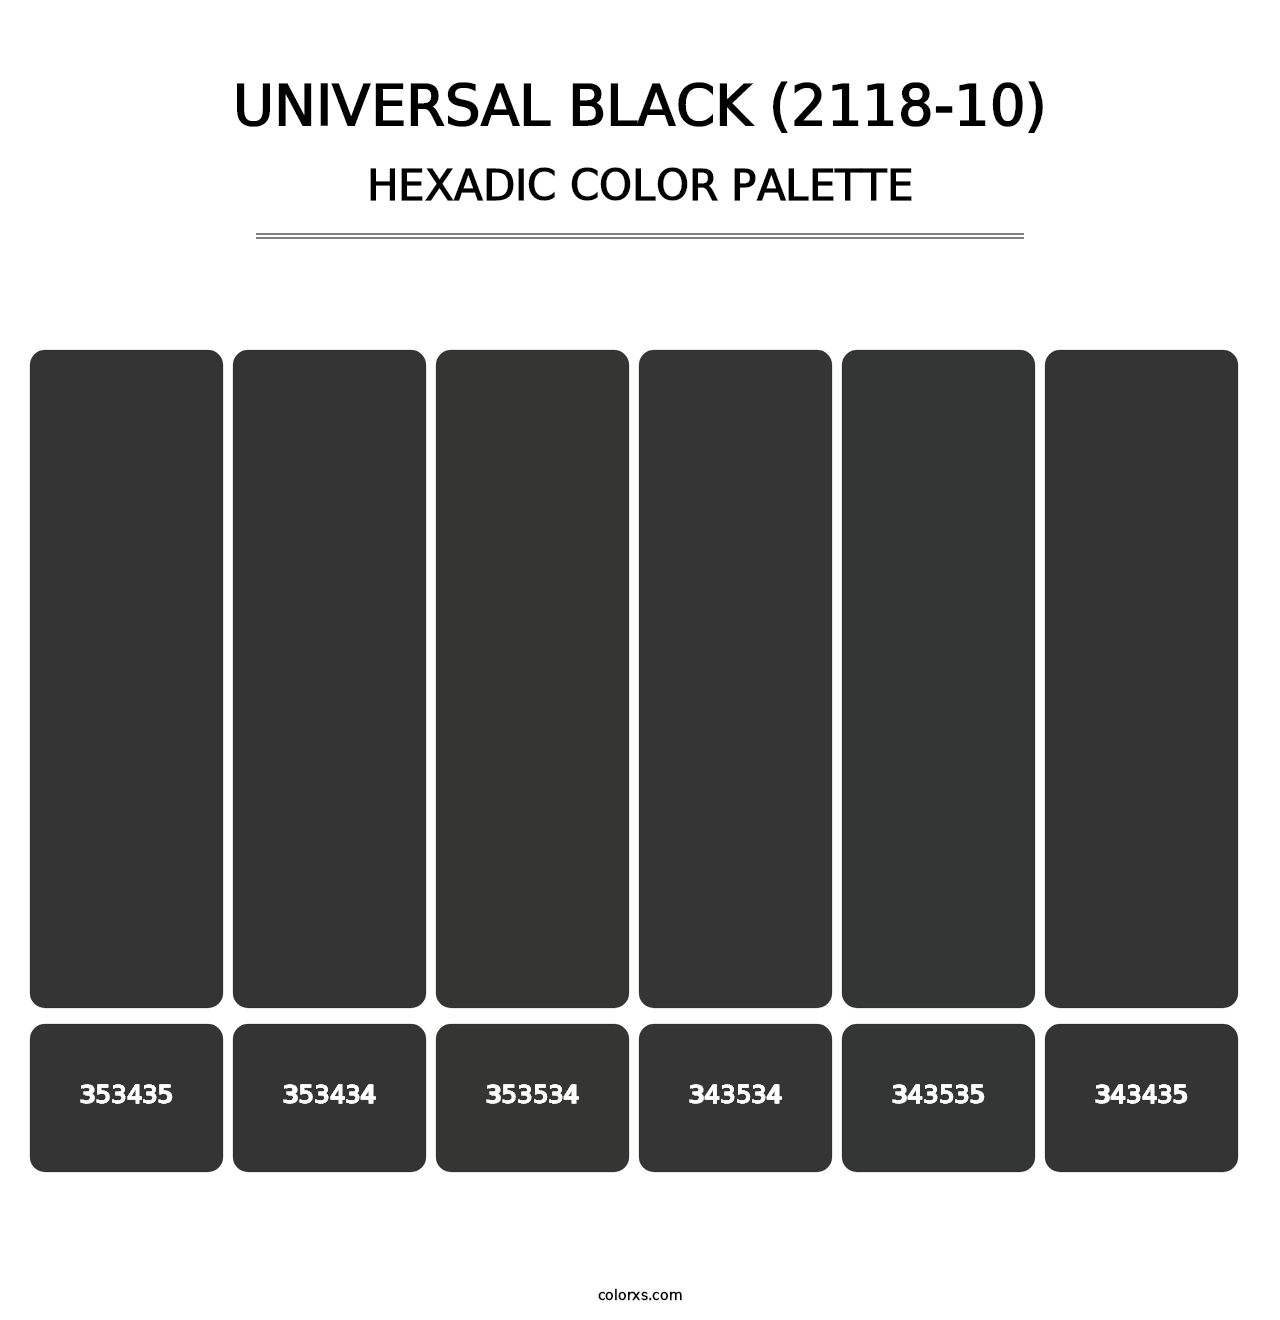 Universal Black (2118-10) - Hexadic Color Palette